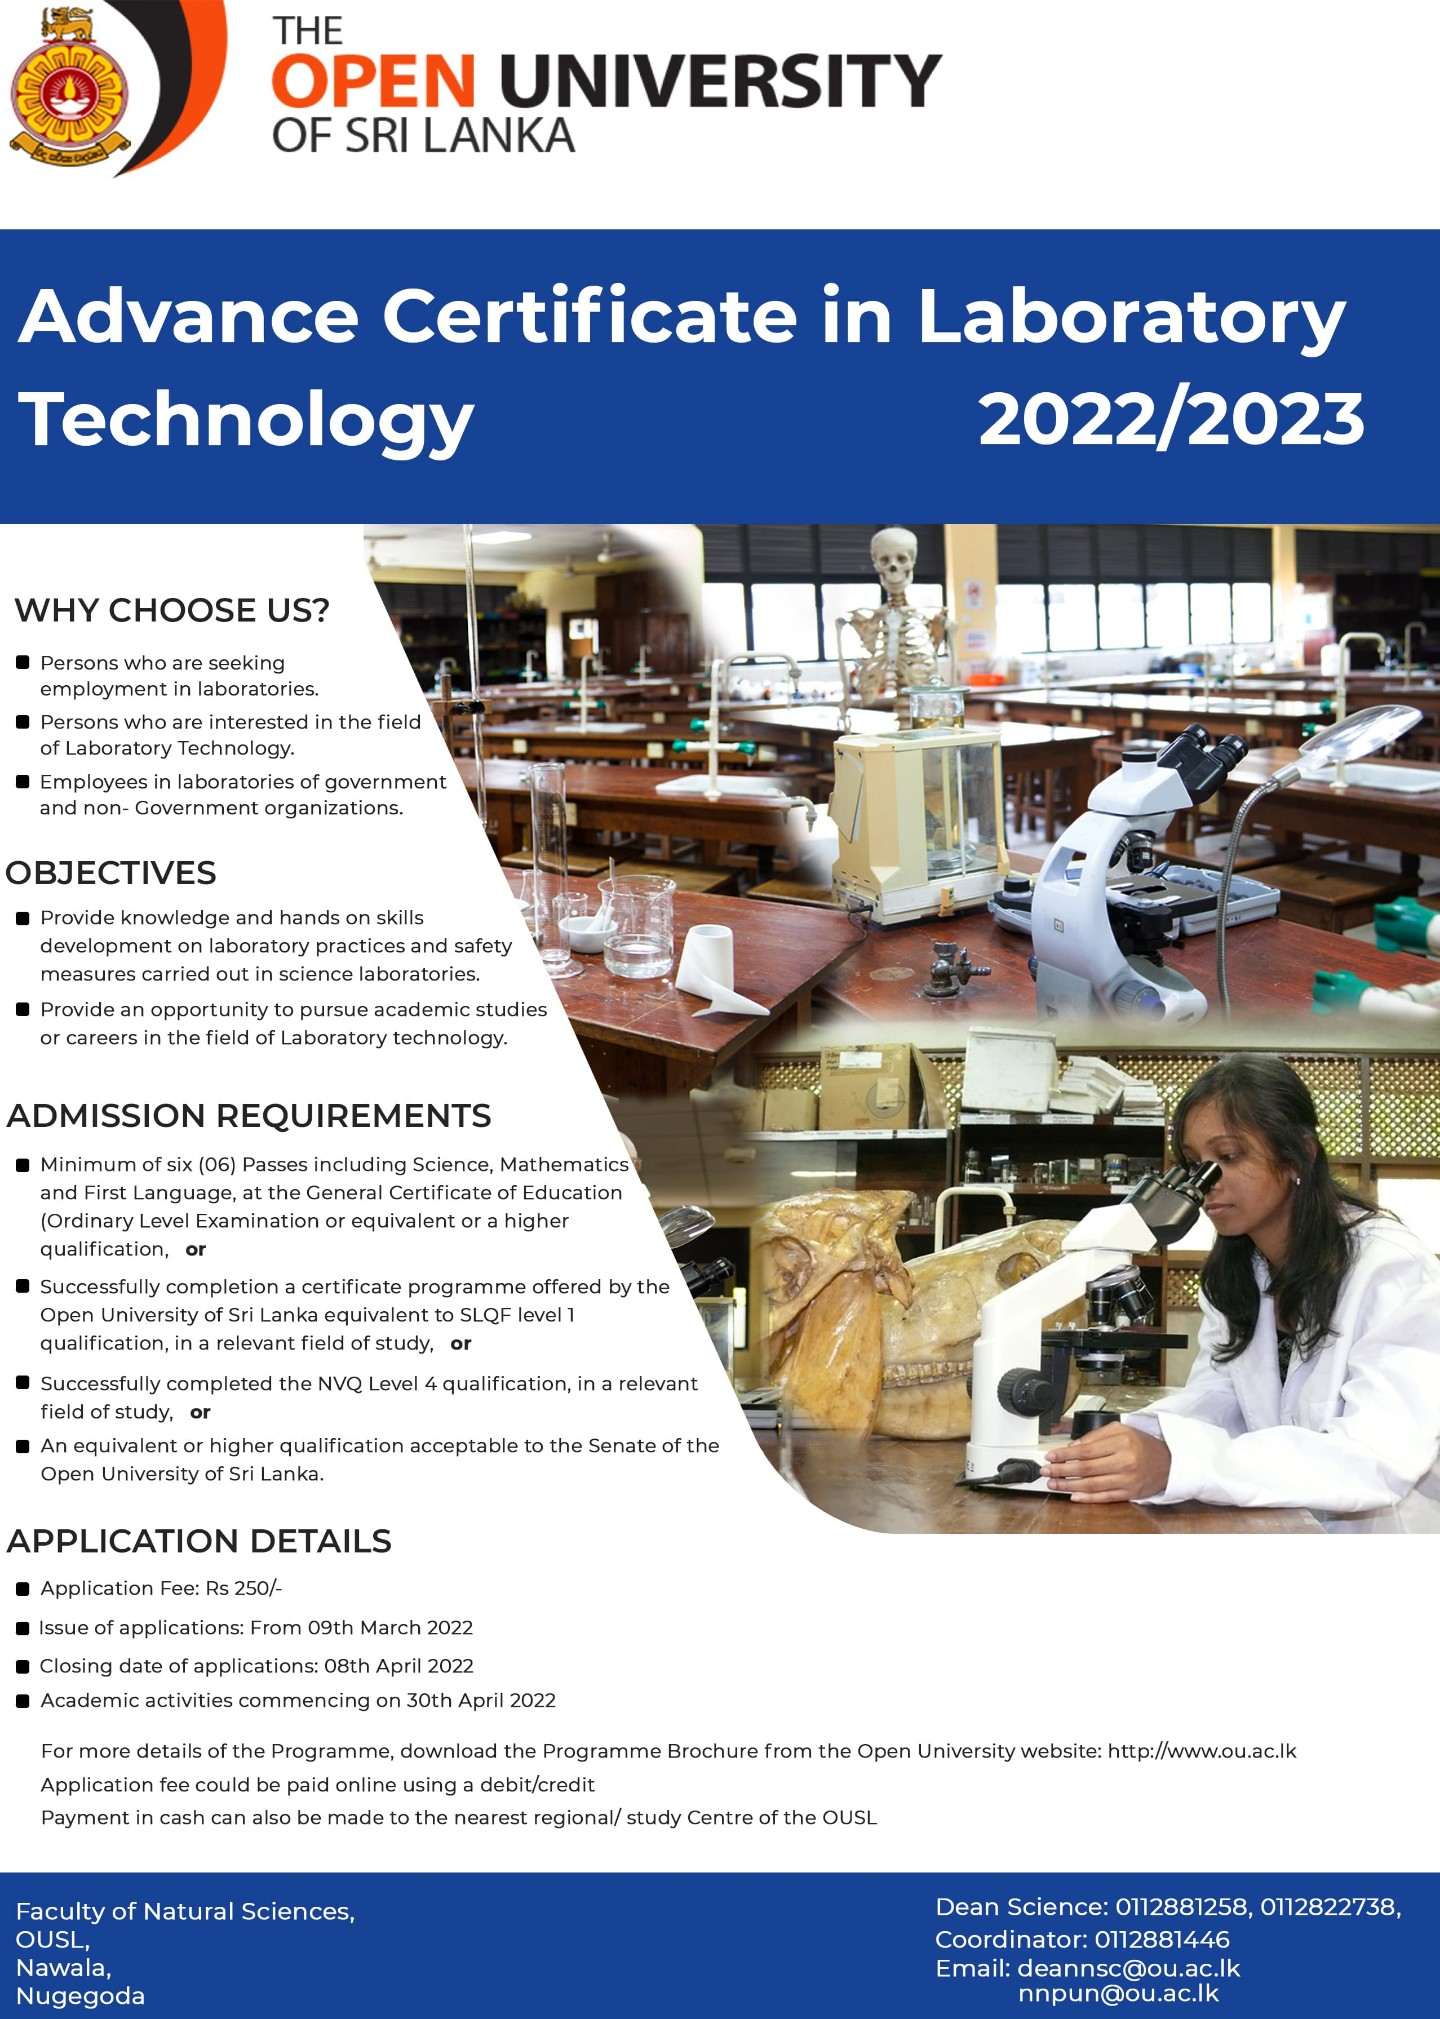 Advanced Certificate in Laboratory Technology 2022/2023 - The Open University of Sri Lanka (OUSL)